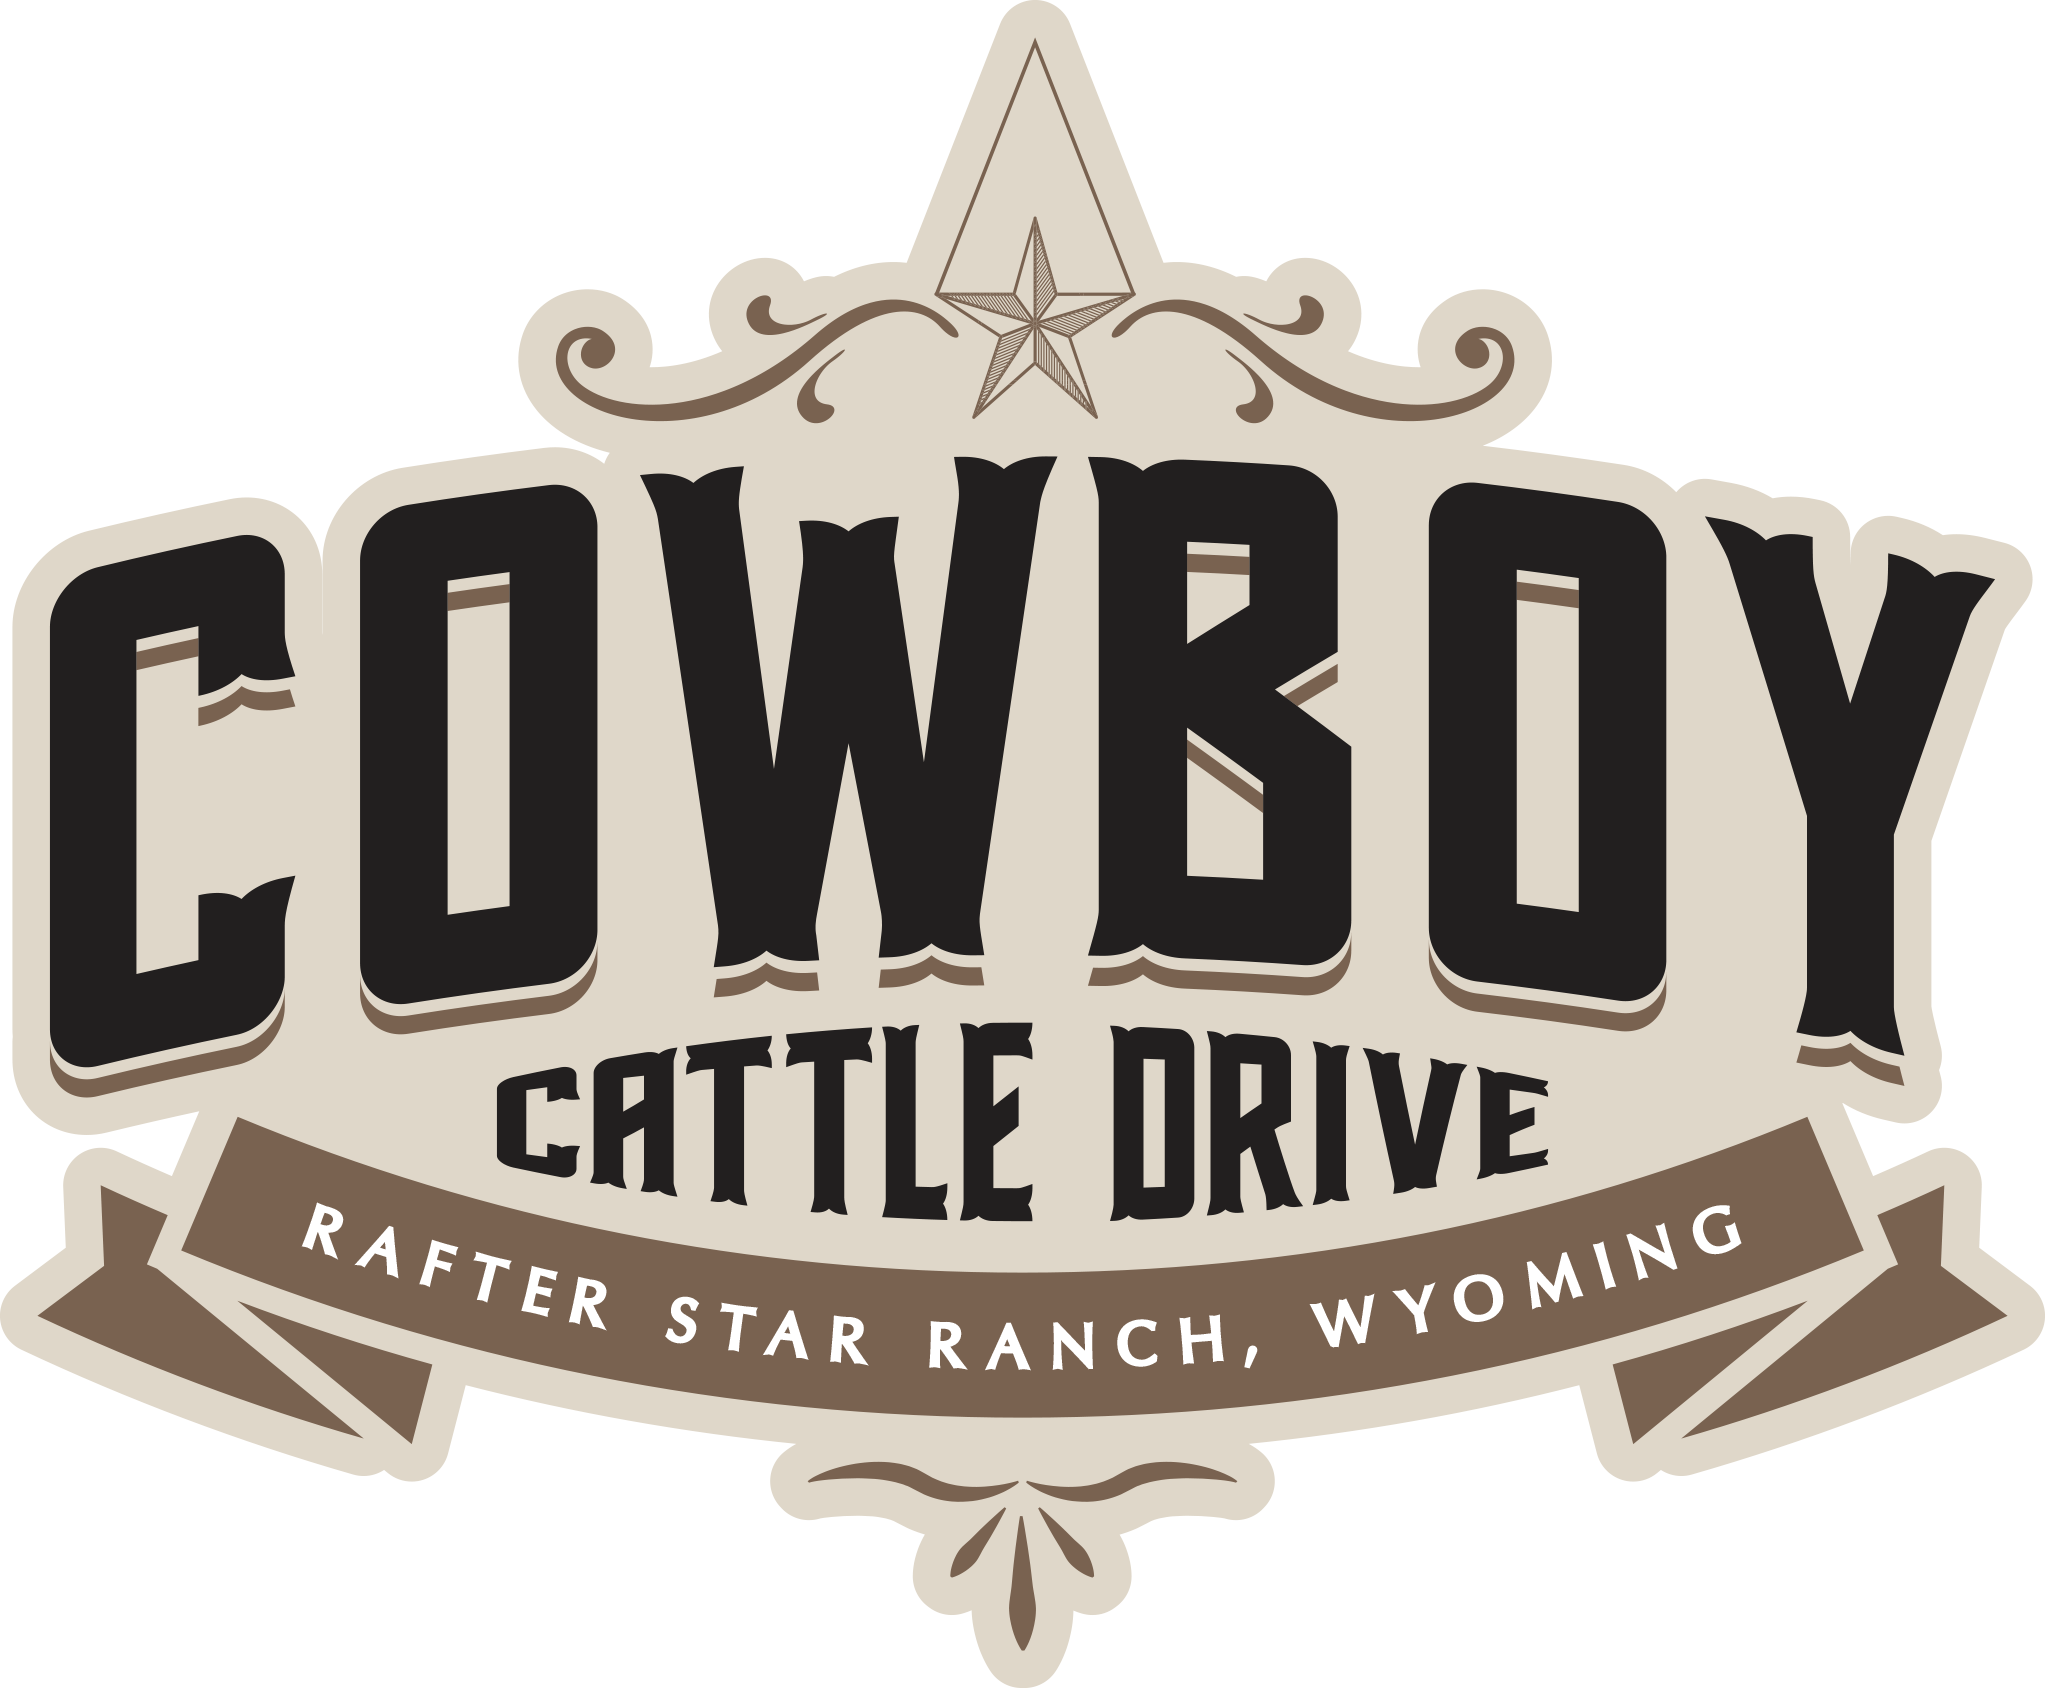 Cowboy Cattle Drive Cattle Drive Logo